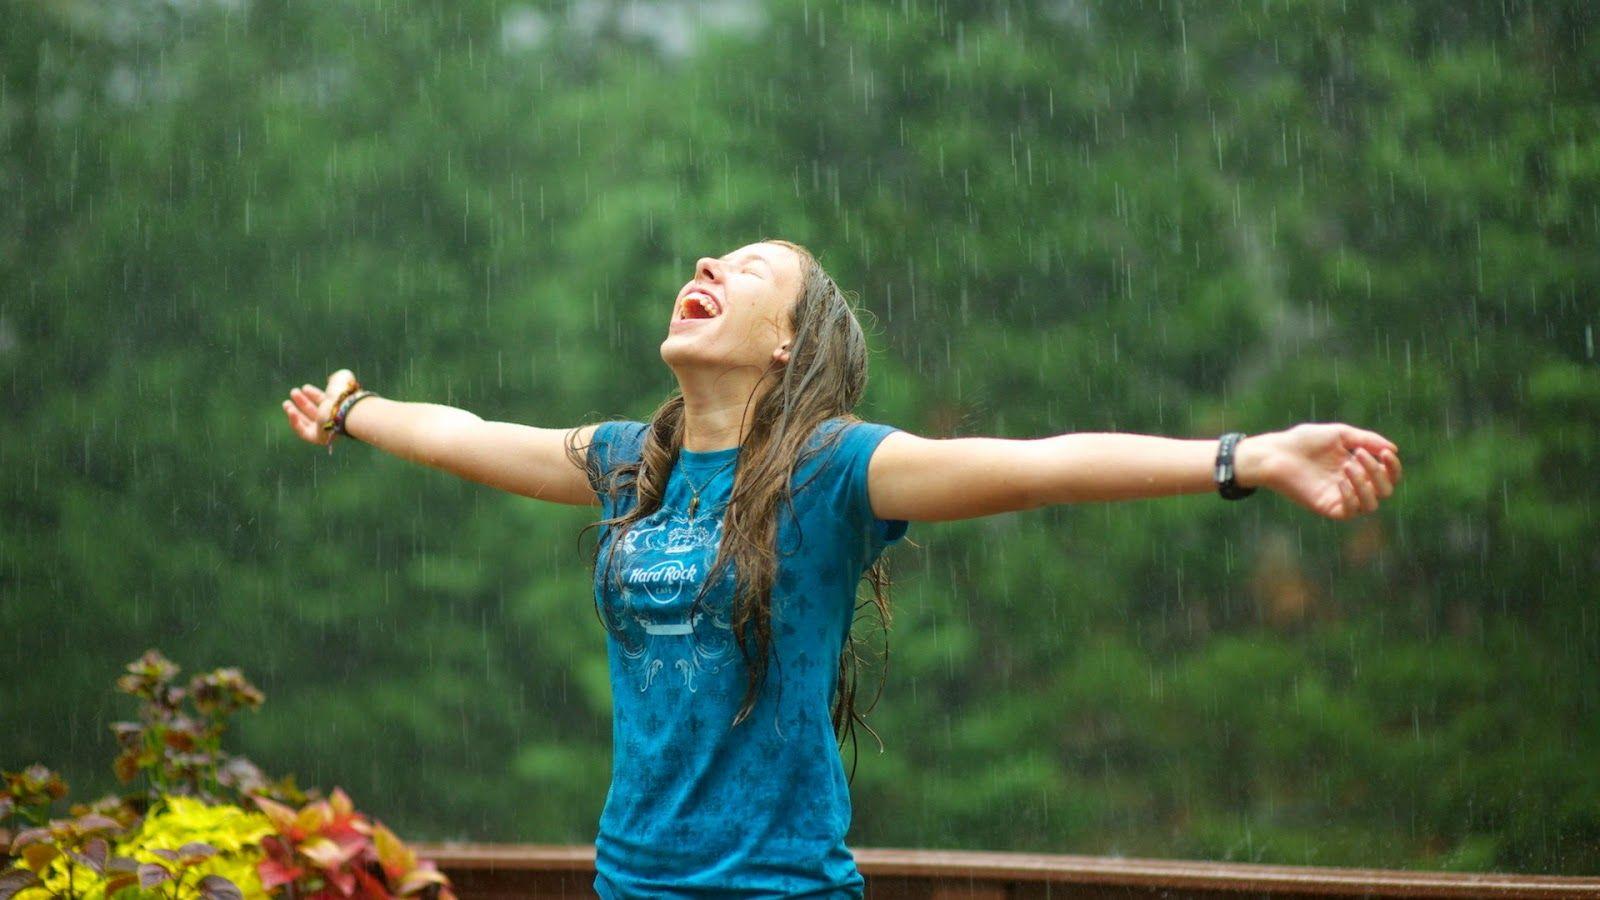 Girls In Rain Image. Beautiful image HD Picture & Desktop Wallpaper